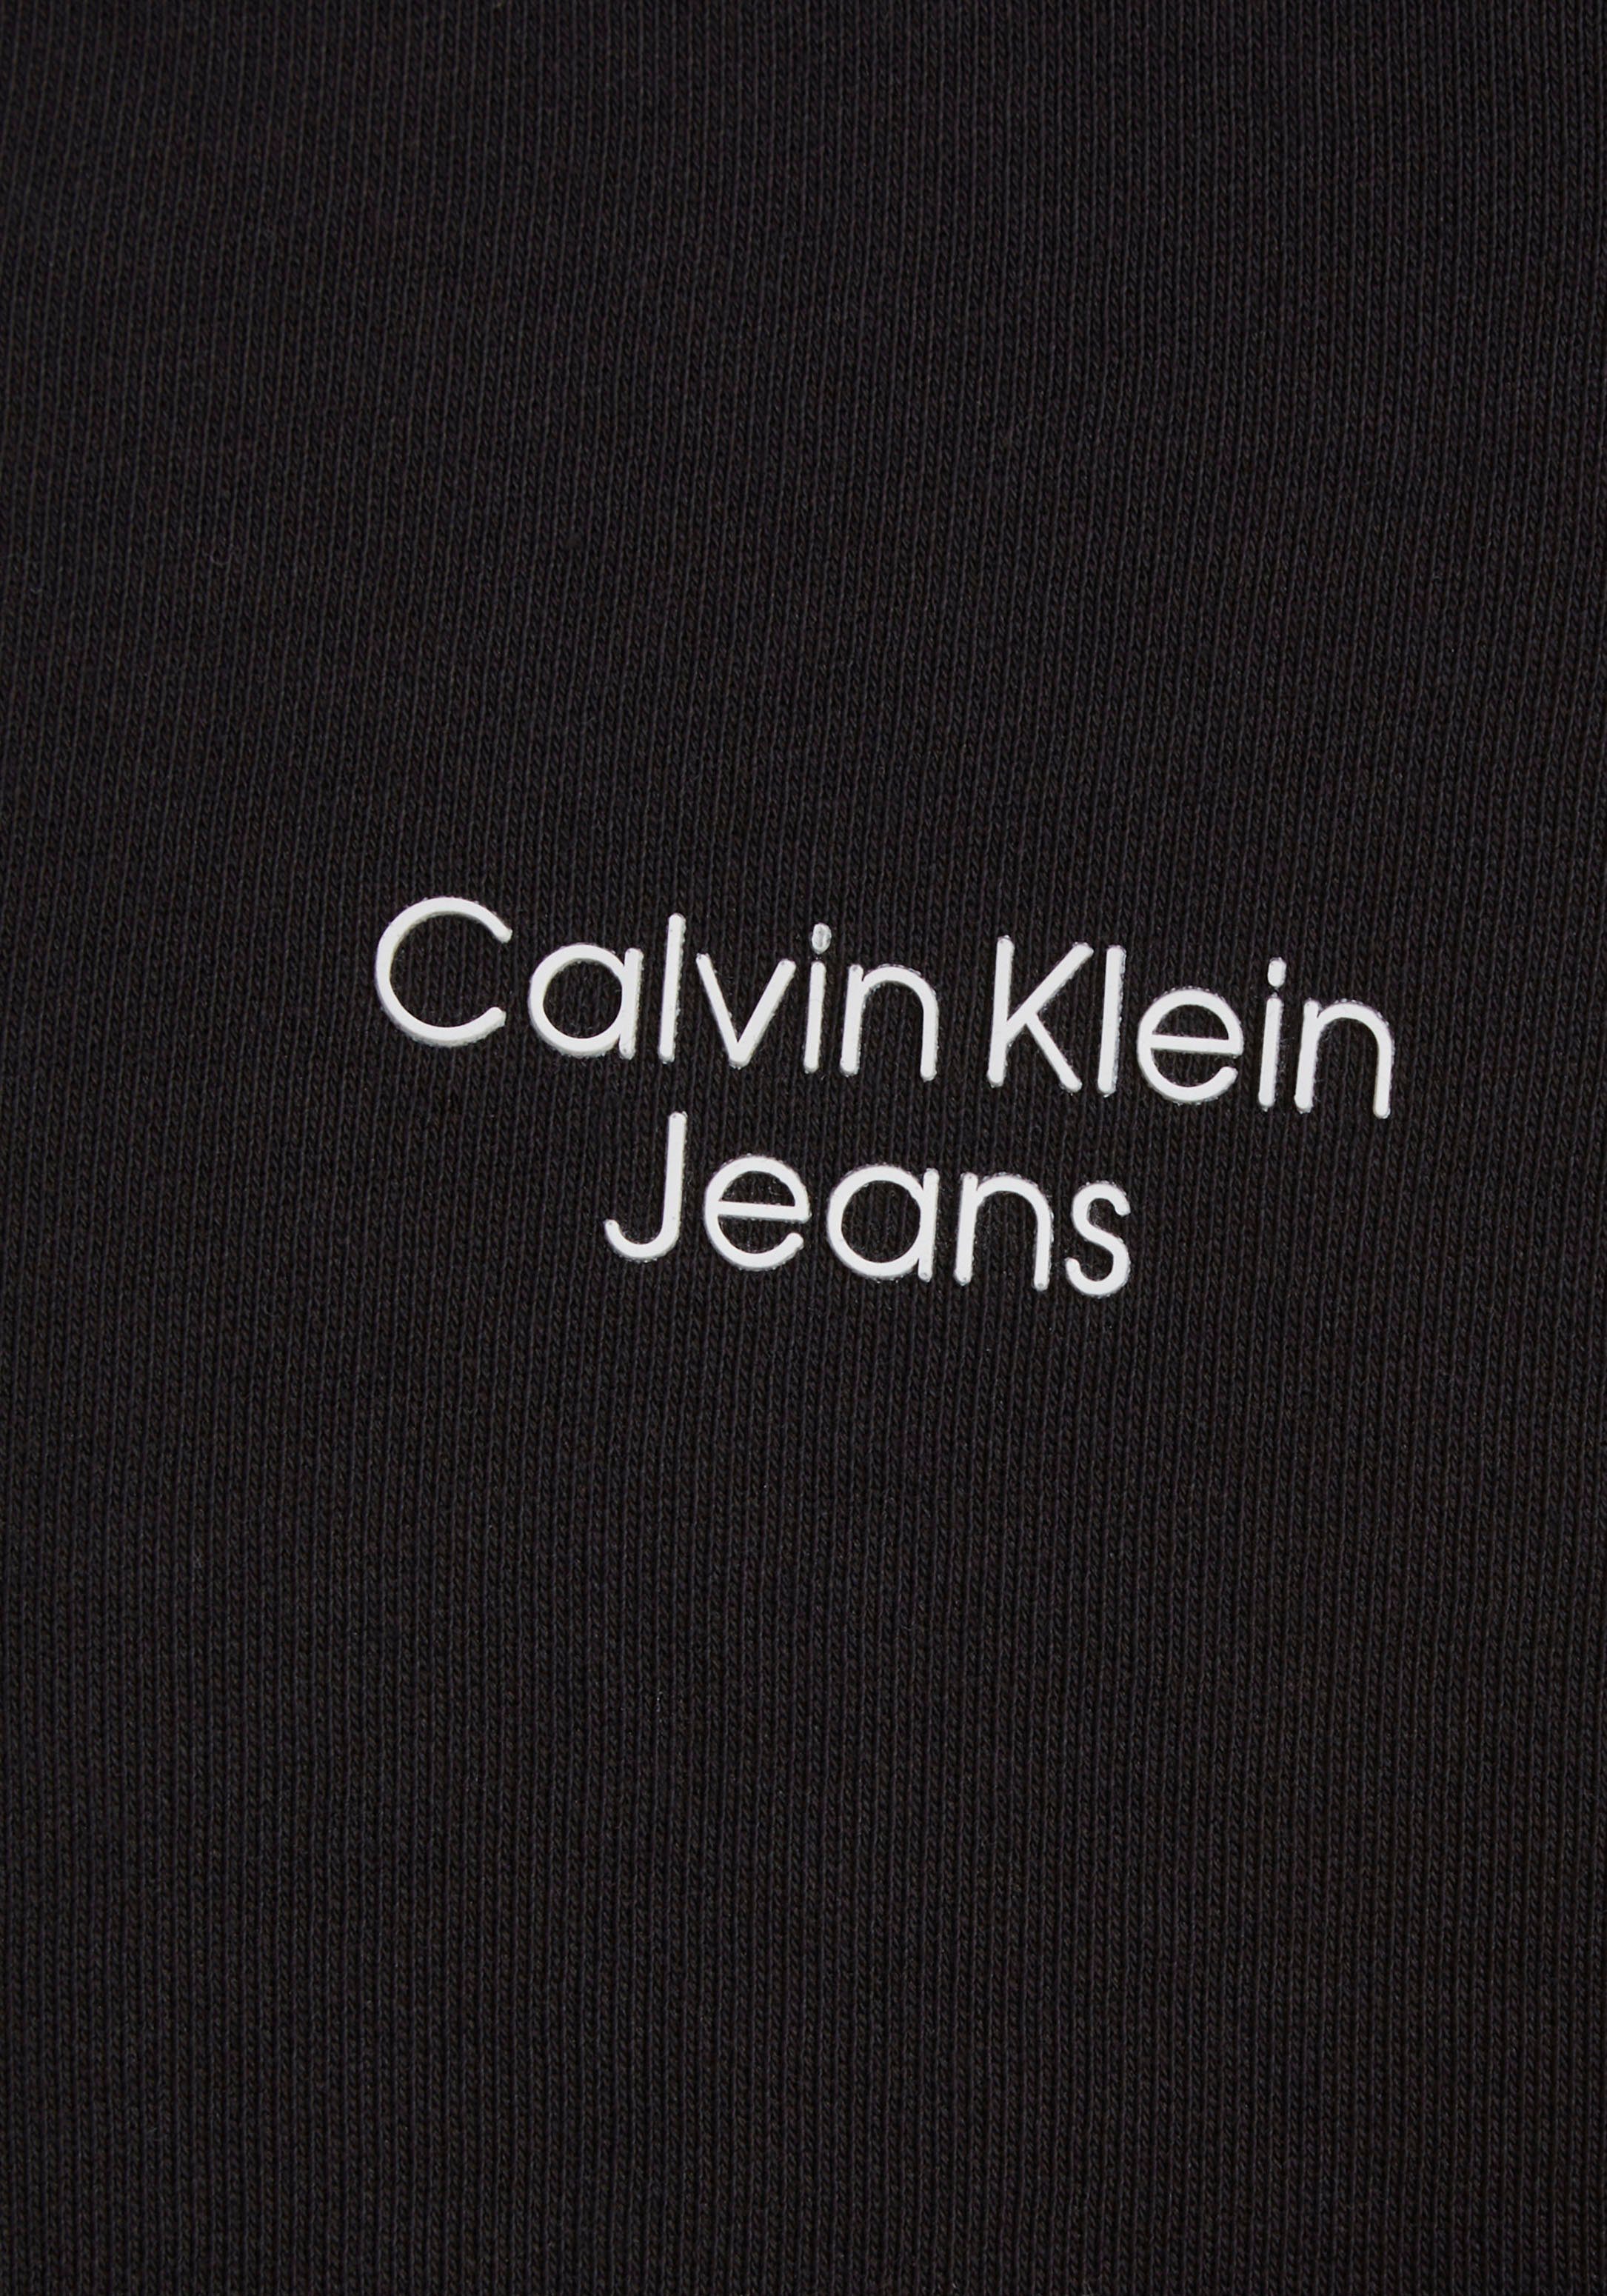 STACK CKJ SWEATSHIRT Calvin LOGO Klein Sweatshirt Jeans